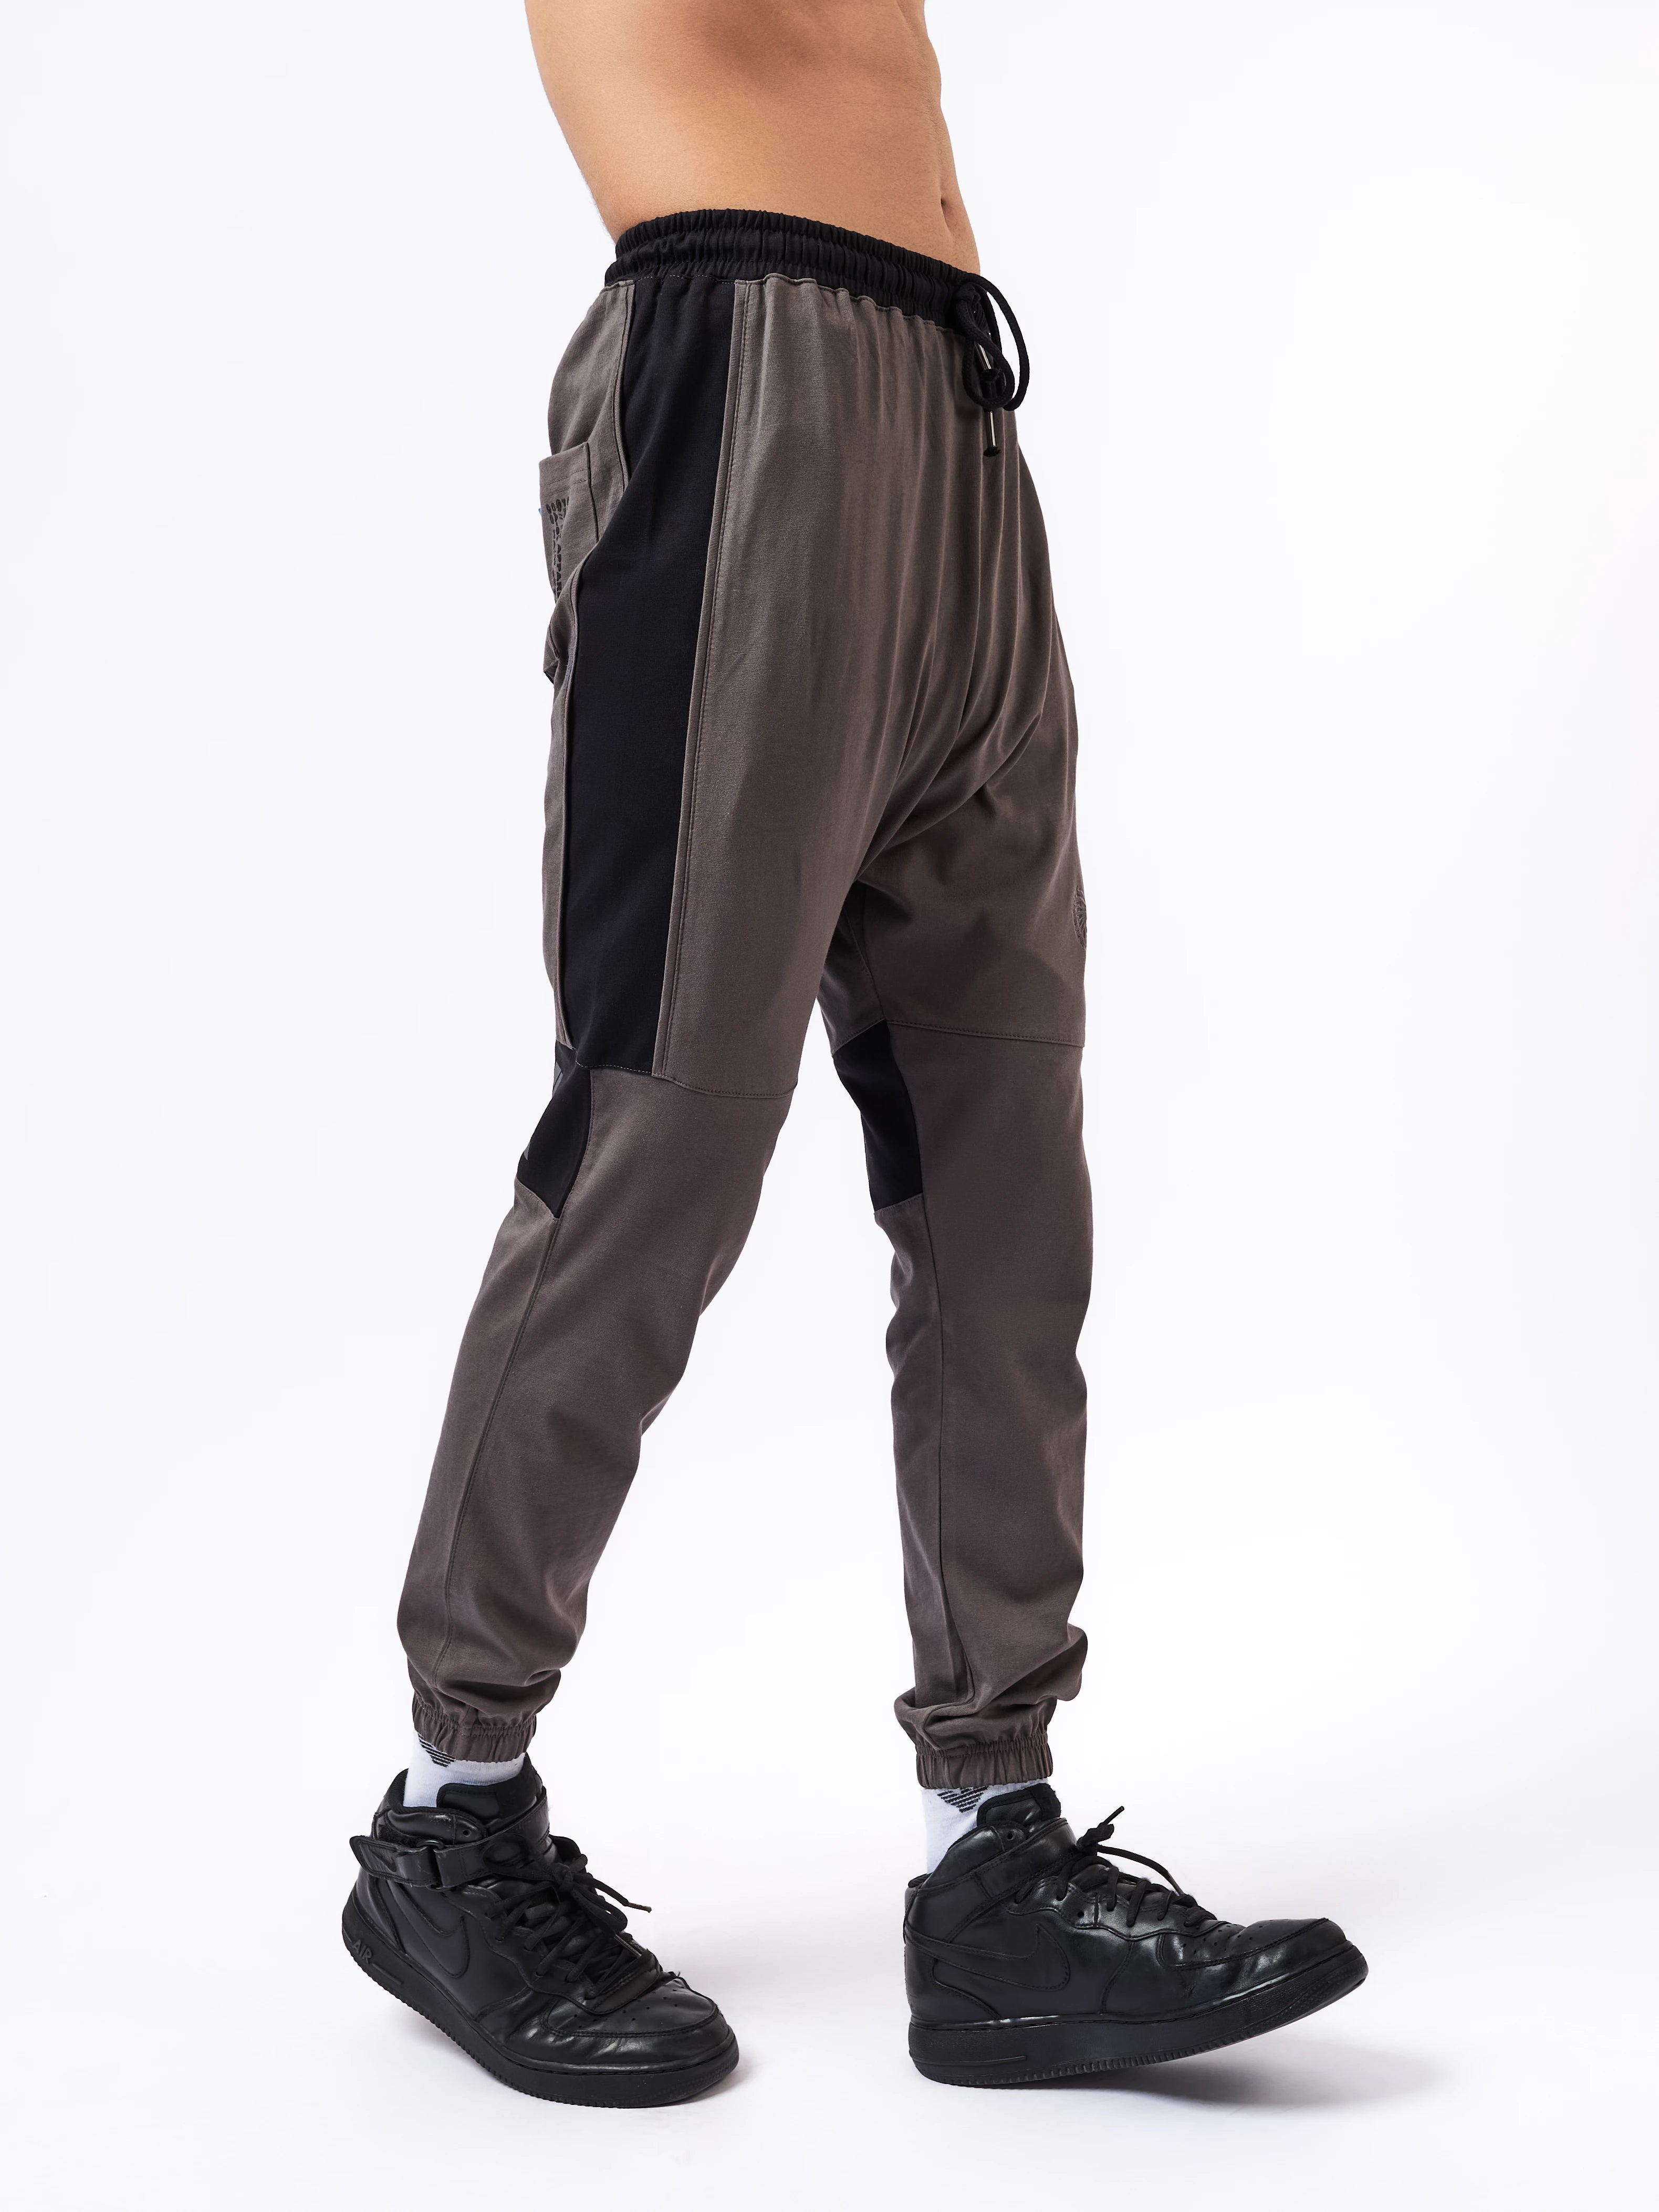 Track Suit Men's Trouser | Rs.80 | Imported Sports Trousers | Nike Puma  Adidas | @explorekarachi - YouTube